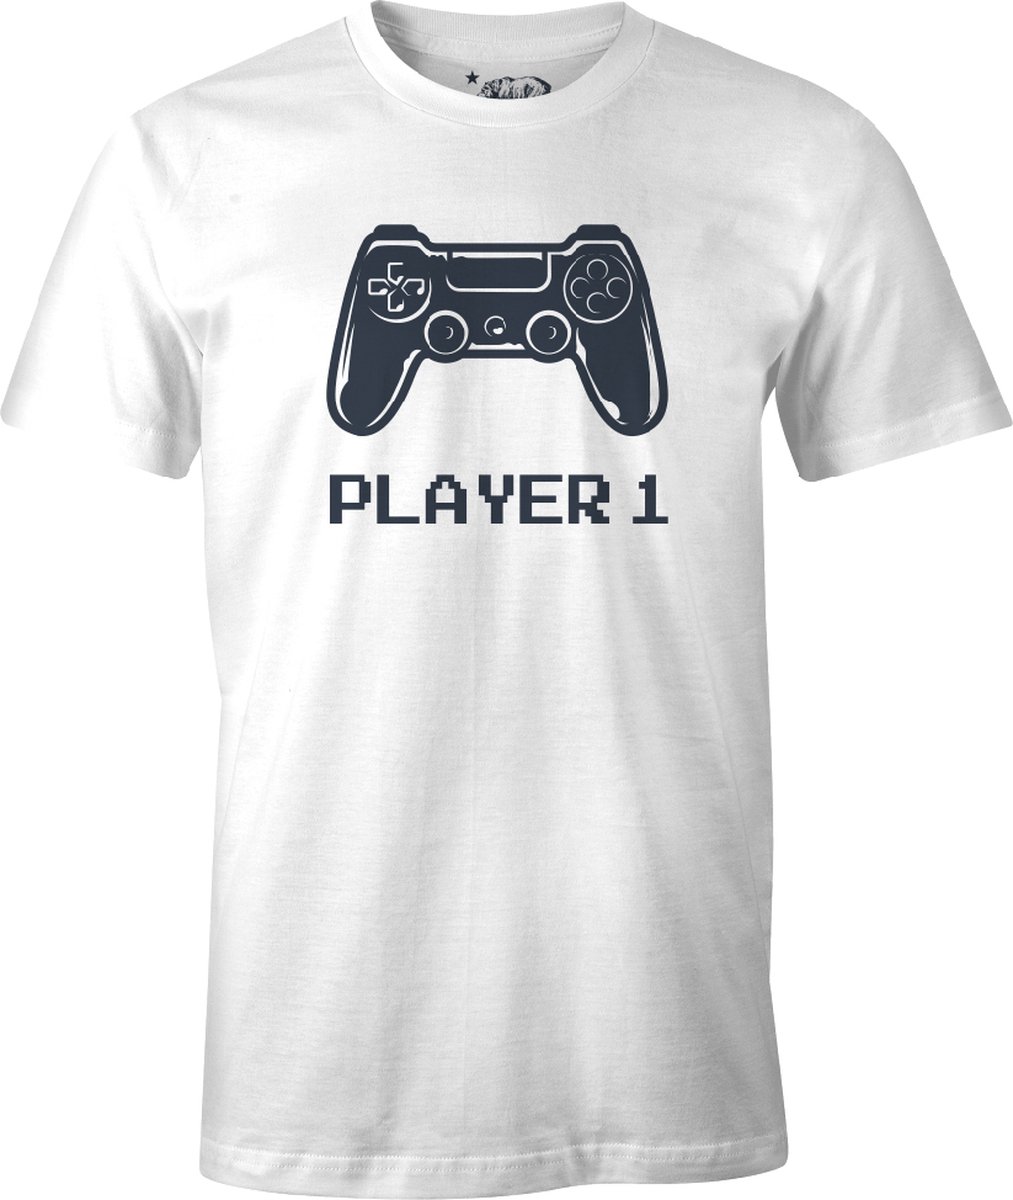 Gaming - Player 1 T-Shirt White - M